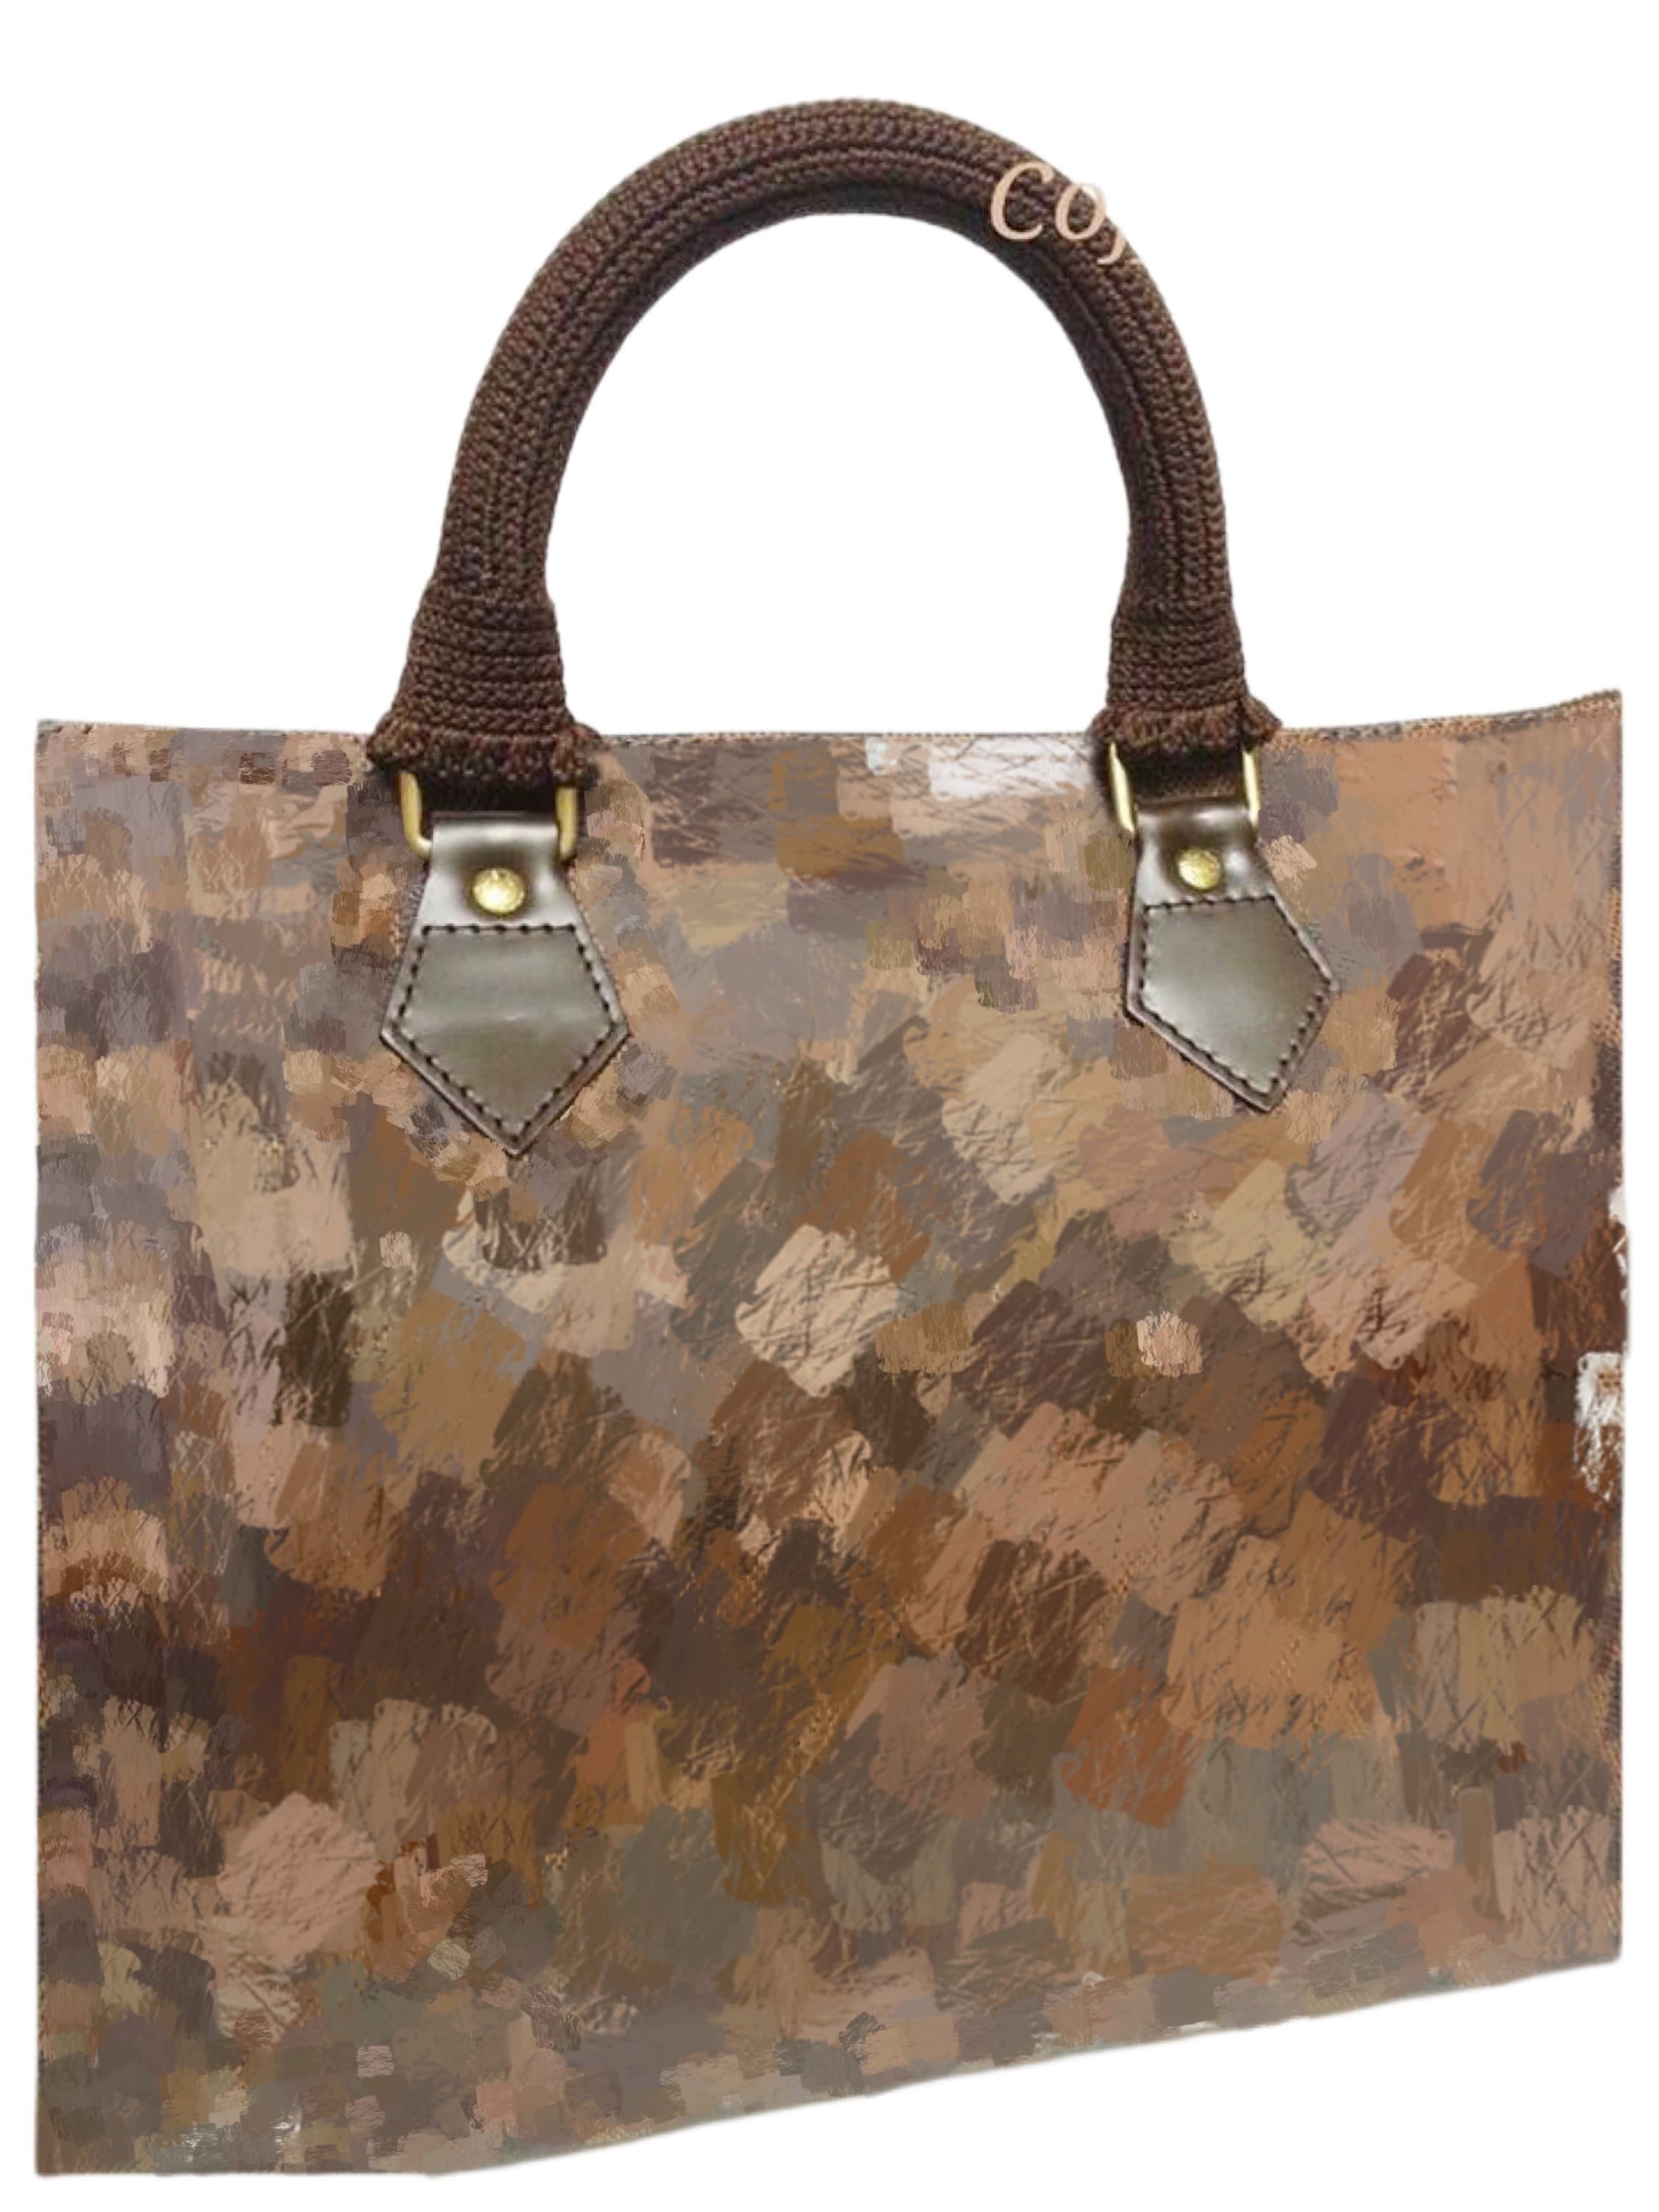 handle cover wrap for lv purses, designer bags